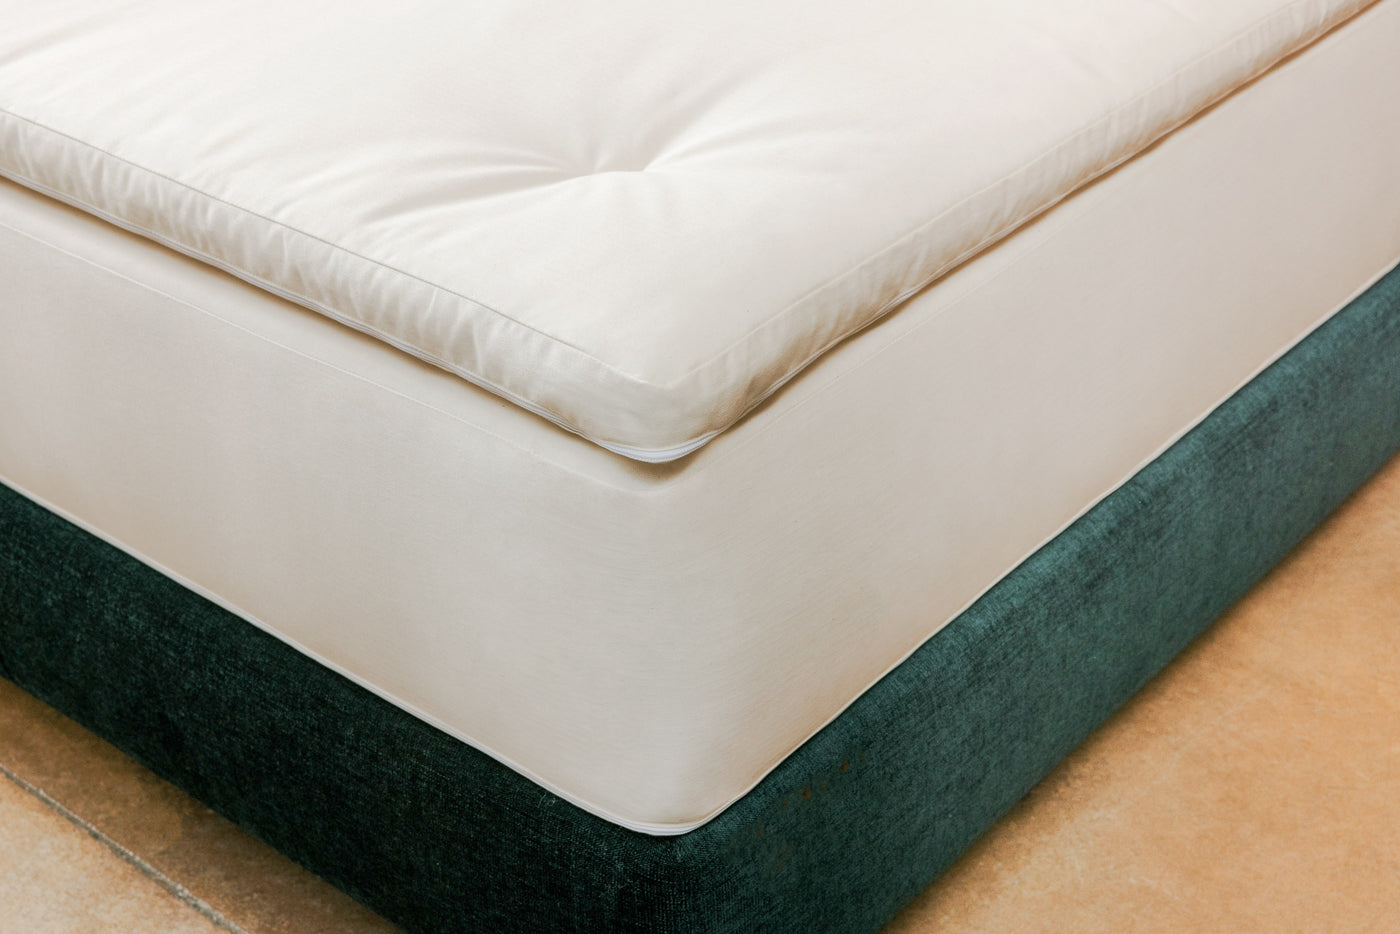 Corner of natural latex mattress topper on hybrid mattress